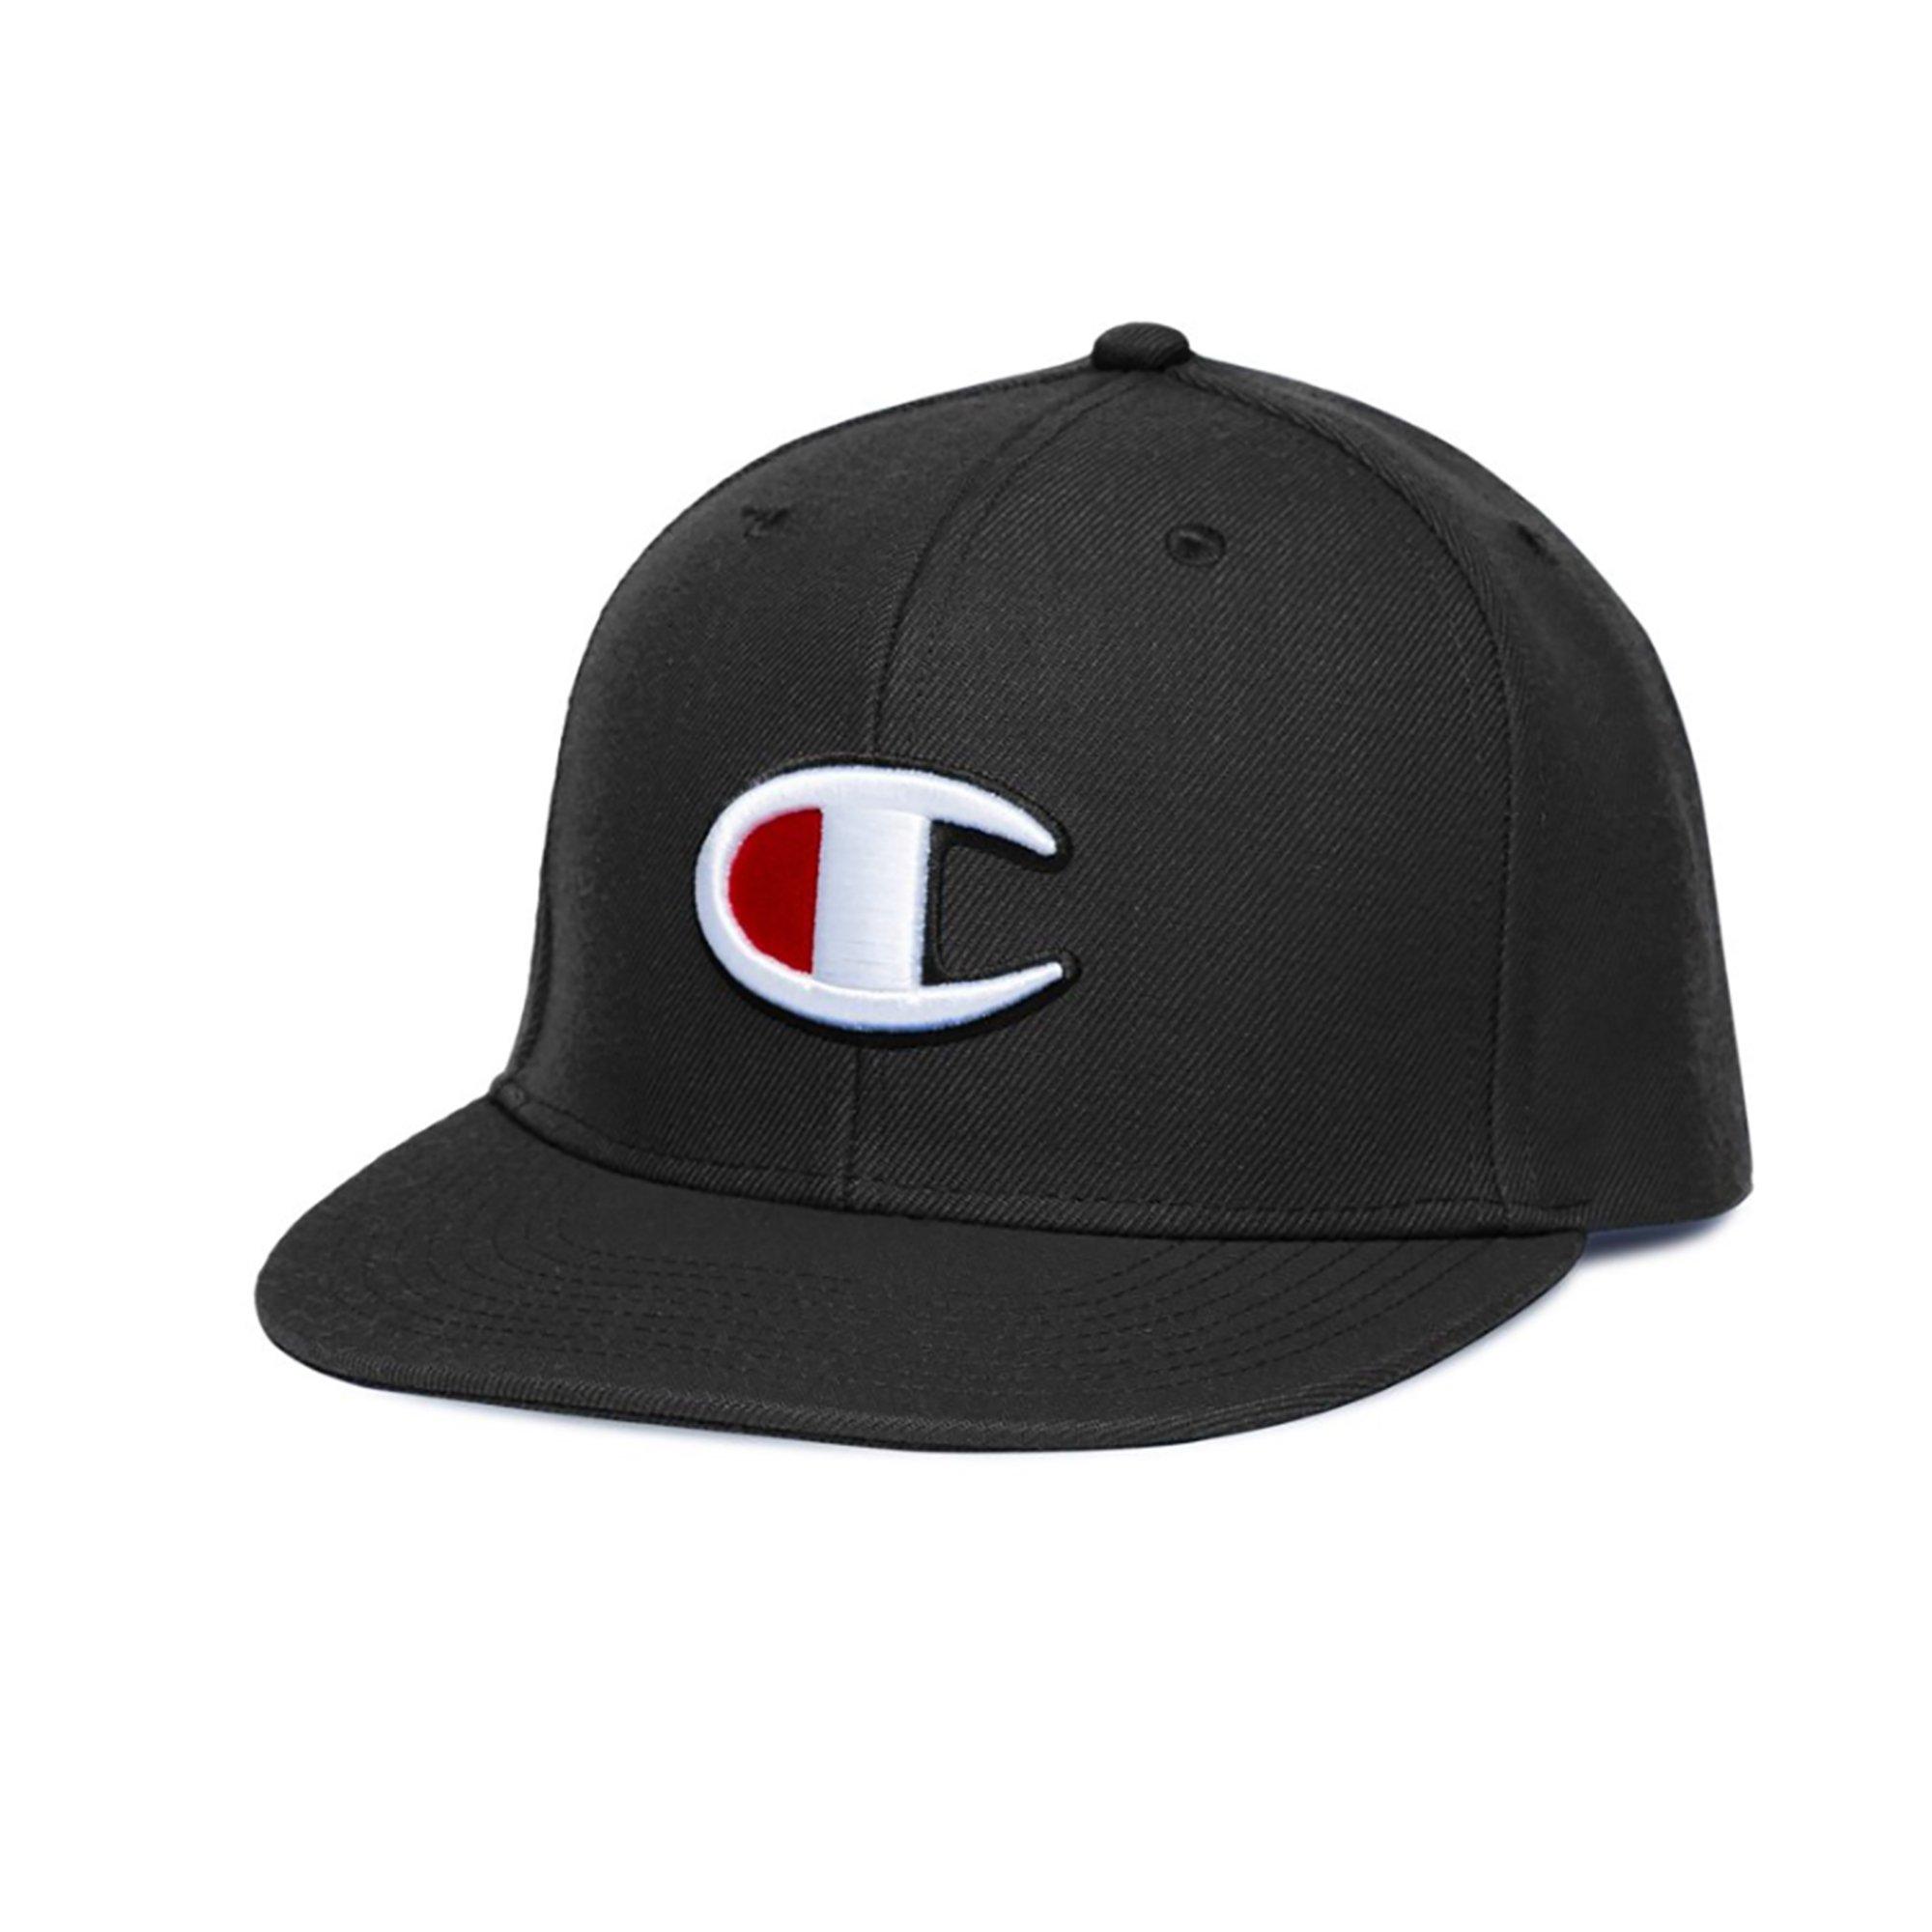 NWT Champion Big C Logo Trucker Hat Snapback Cap Rare Authentic